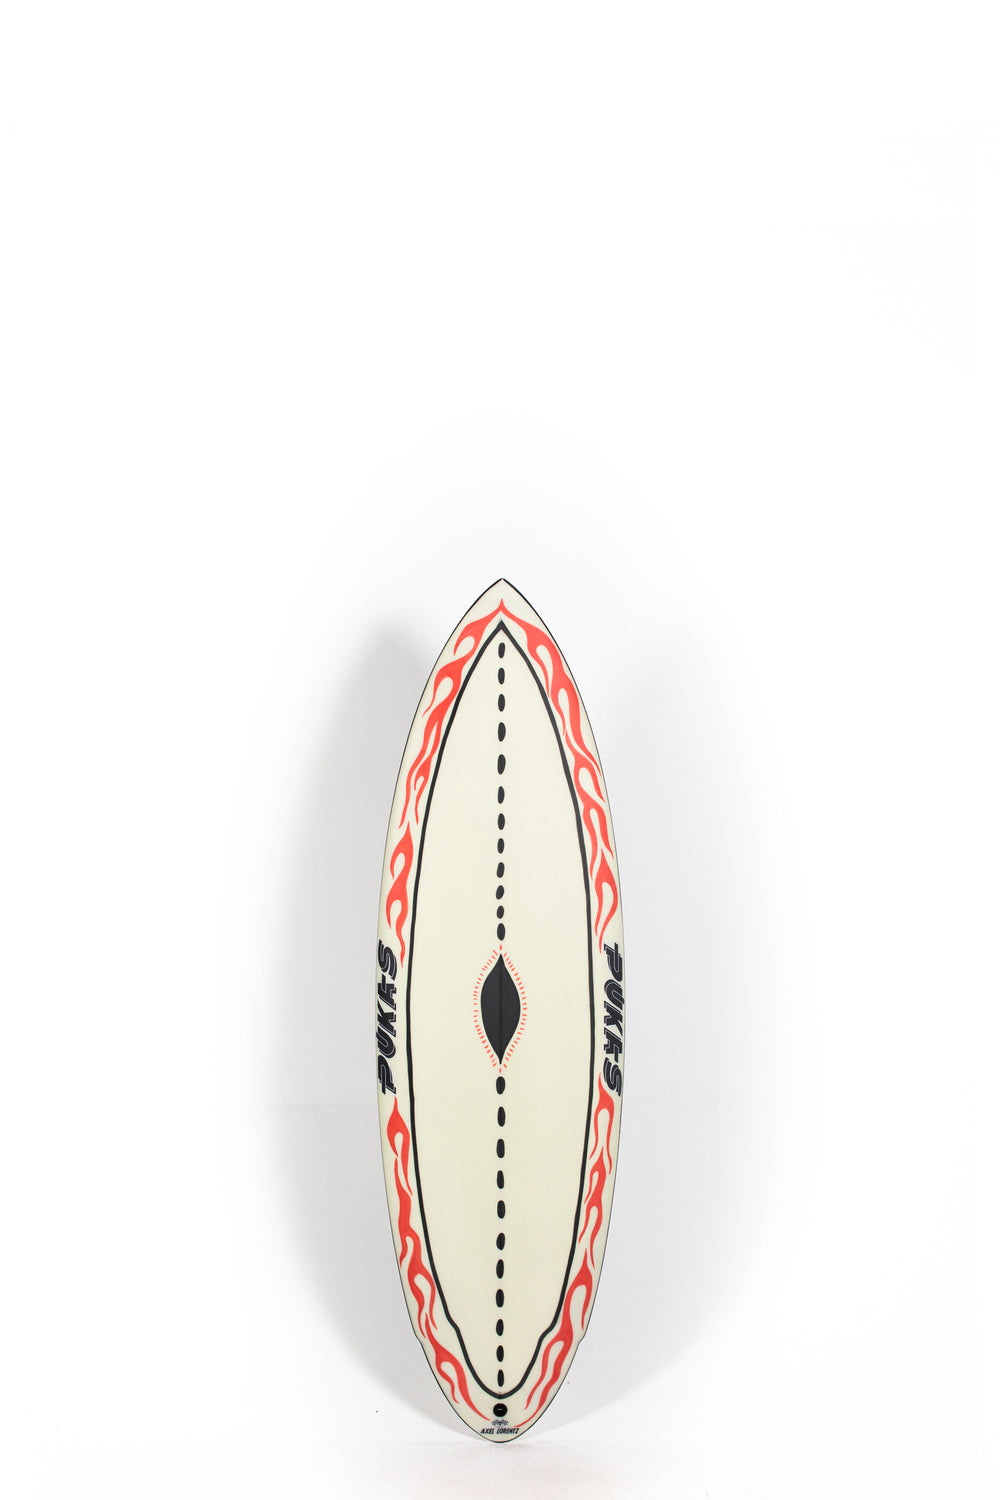 Pukas Surf Shop - Pukas Surfboards - ACID PLAN by Axel Lorentz - 5'5